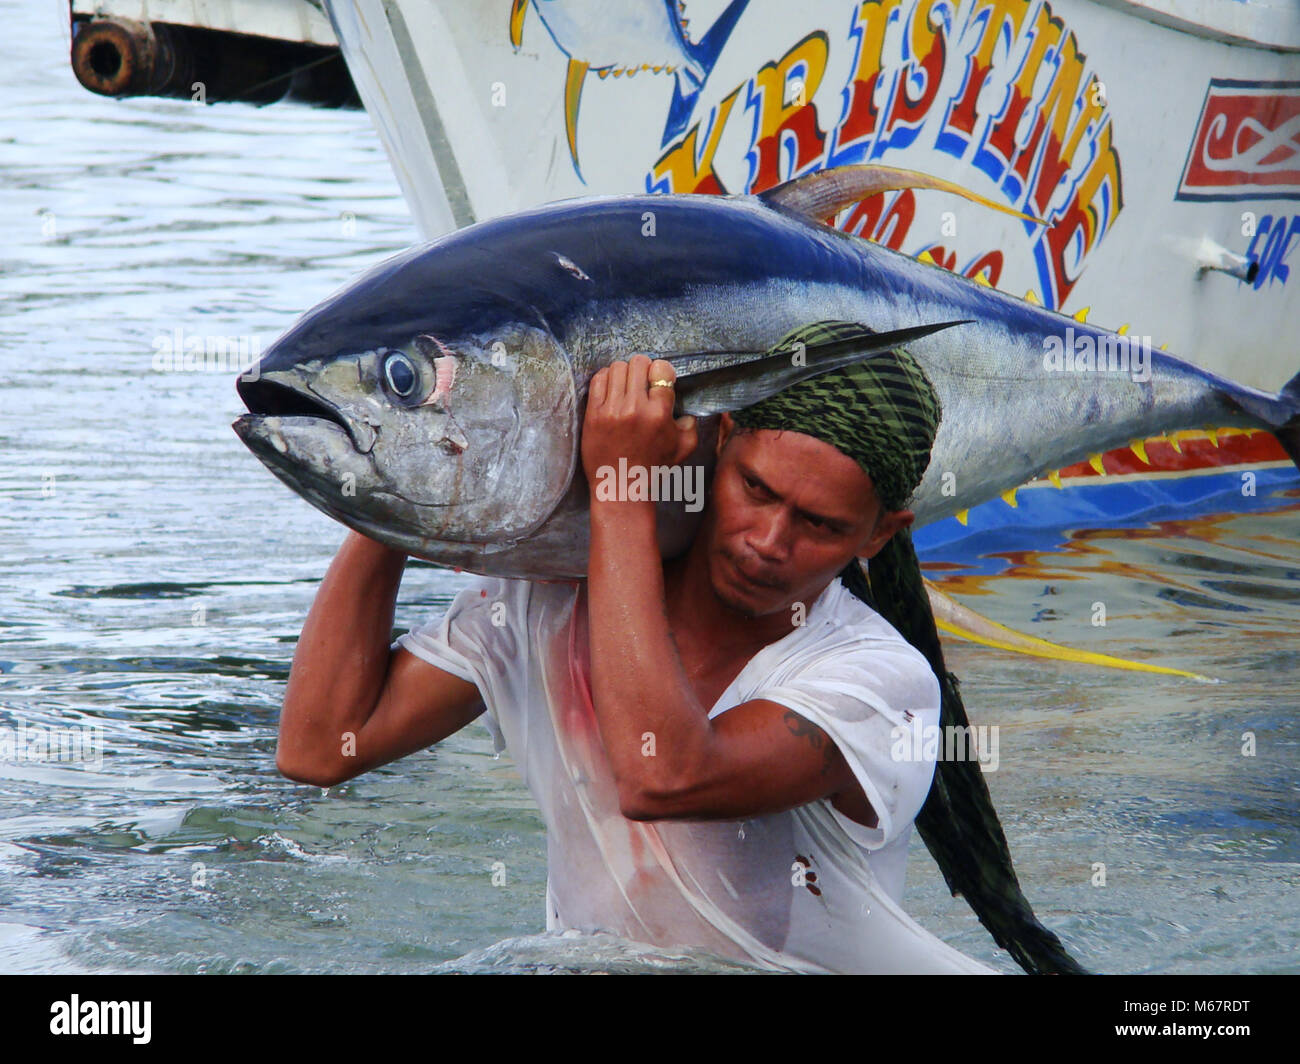 yellowfin tuna Thunnus albacares freshly landed by the artisanal fishermen in Mindoro, Philippines Stock Photo